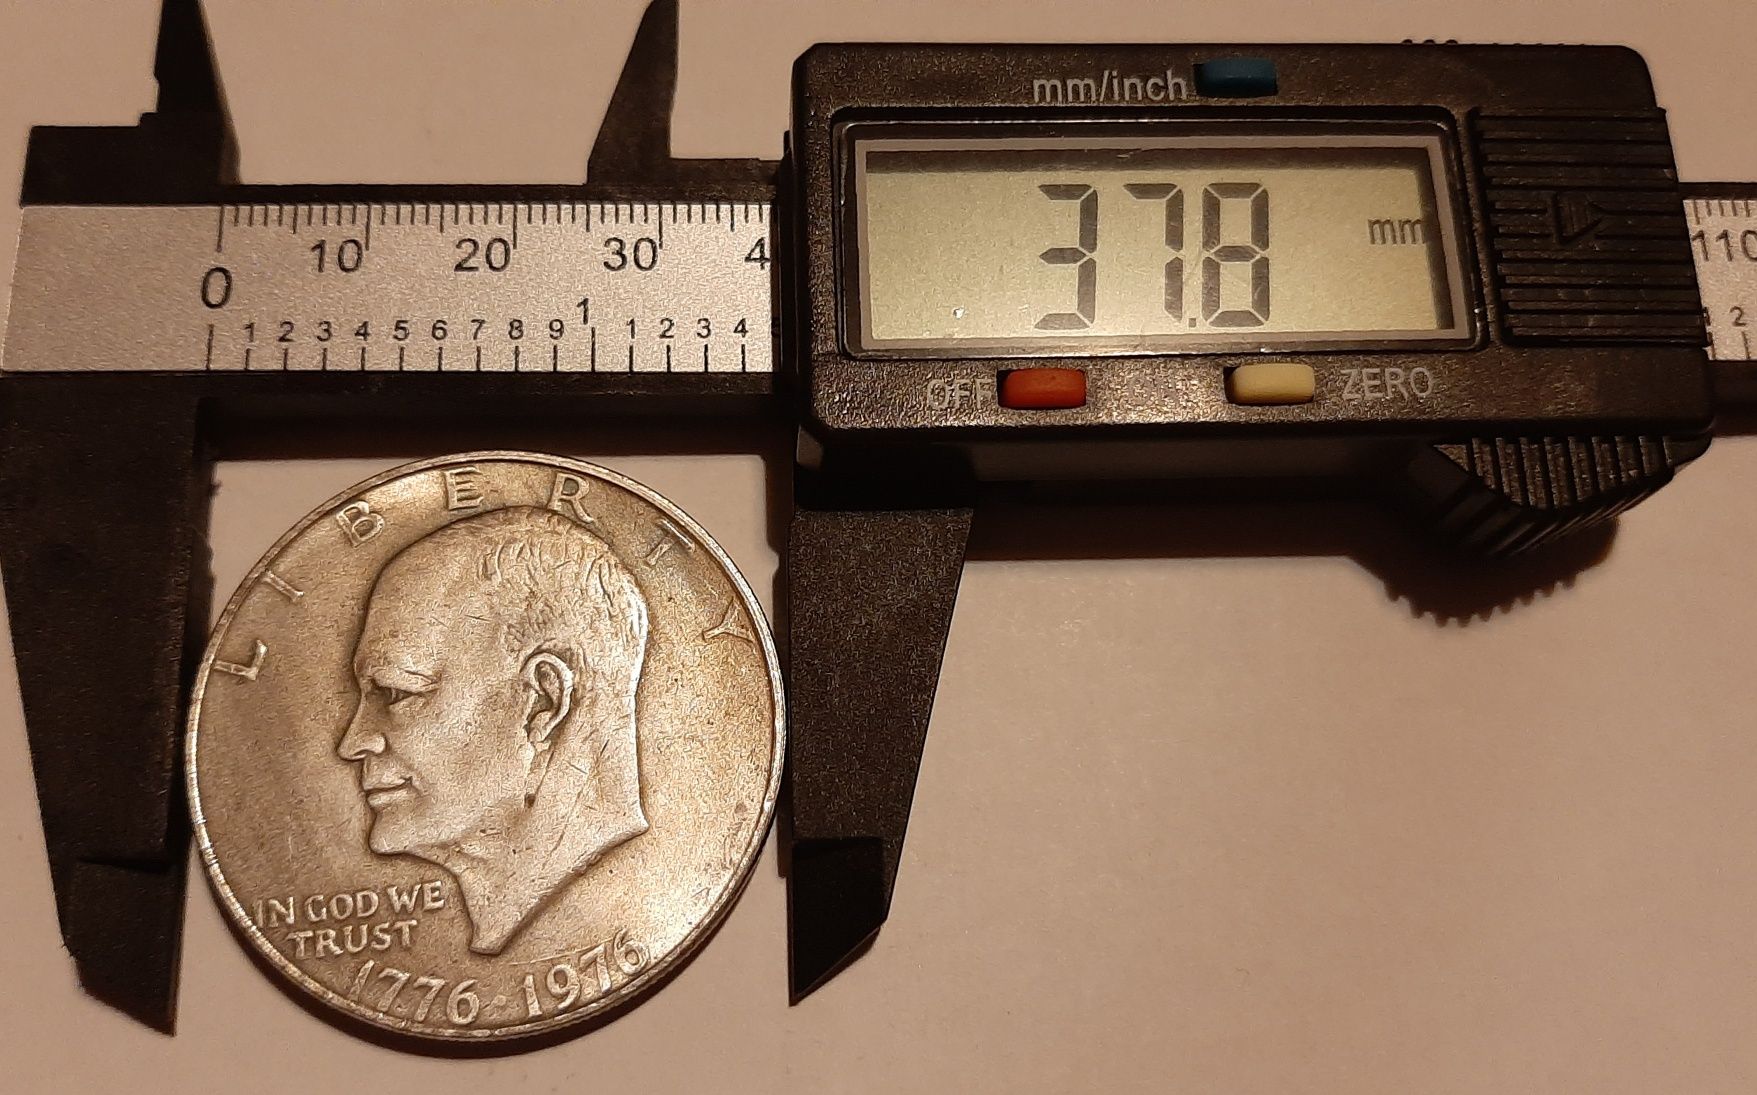 Moneta 1 dolar 1976- Eisenhower Dollar

Stan techniczny: sprawny

Sta